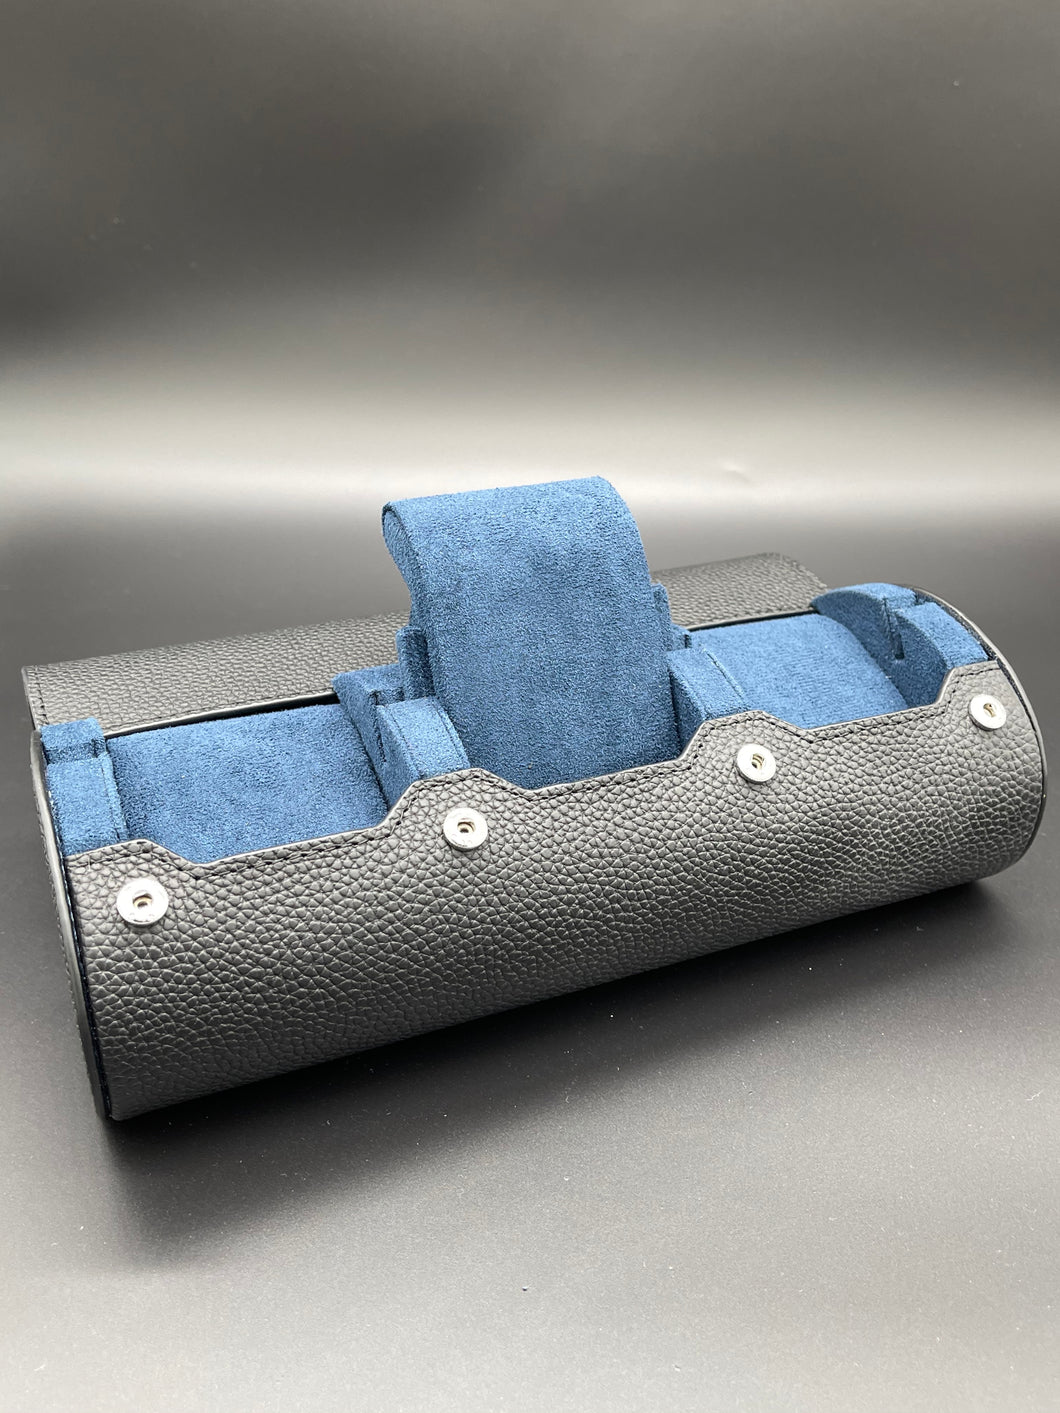 Watch Roll Slide System Storage - Black Togo leather blue interior - 3 slots